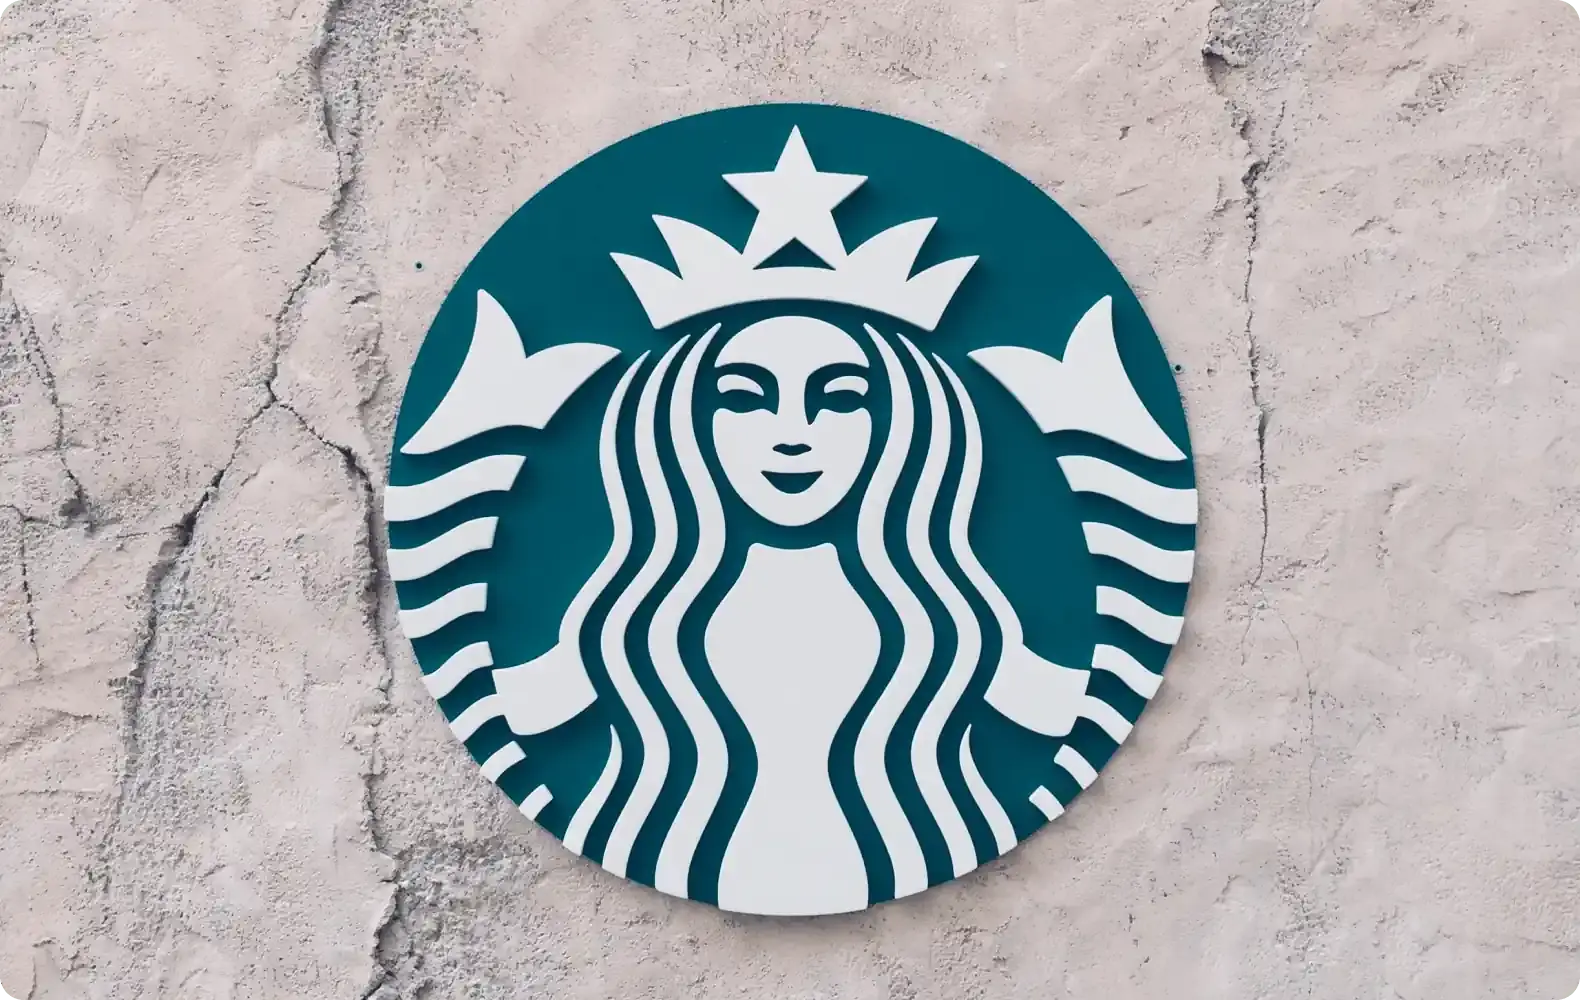 Photograph of the Starbucks logo.